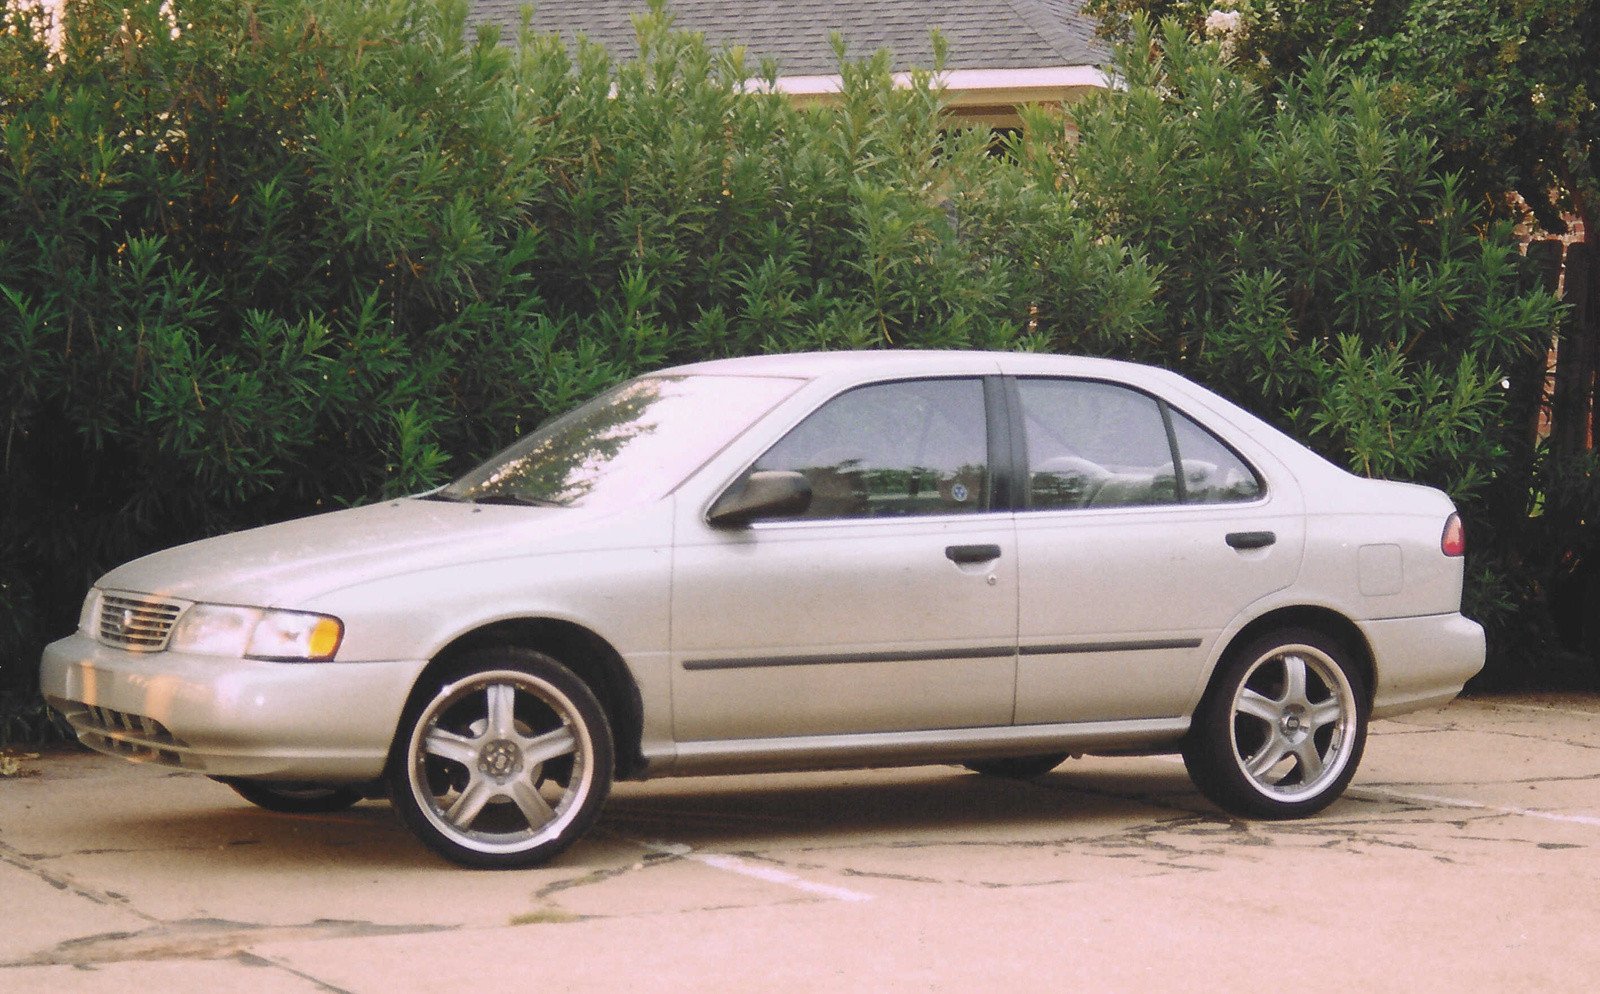 1997 Nissan Sentra